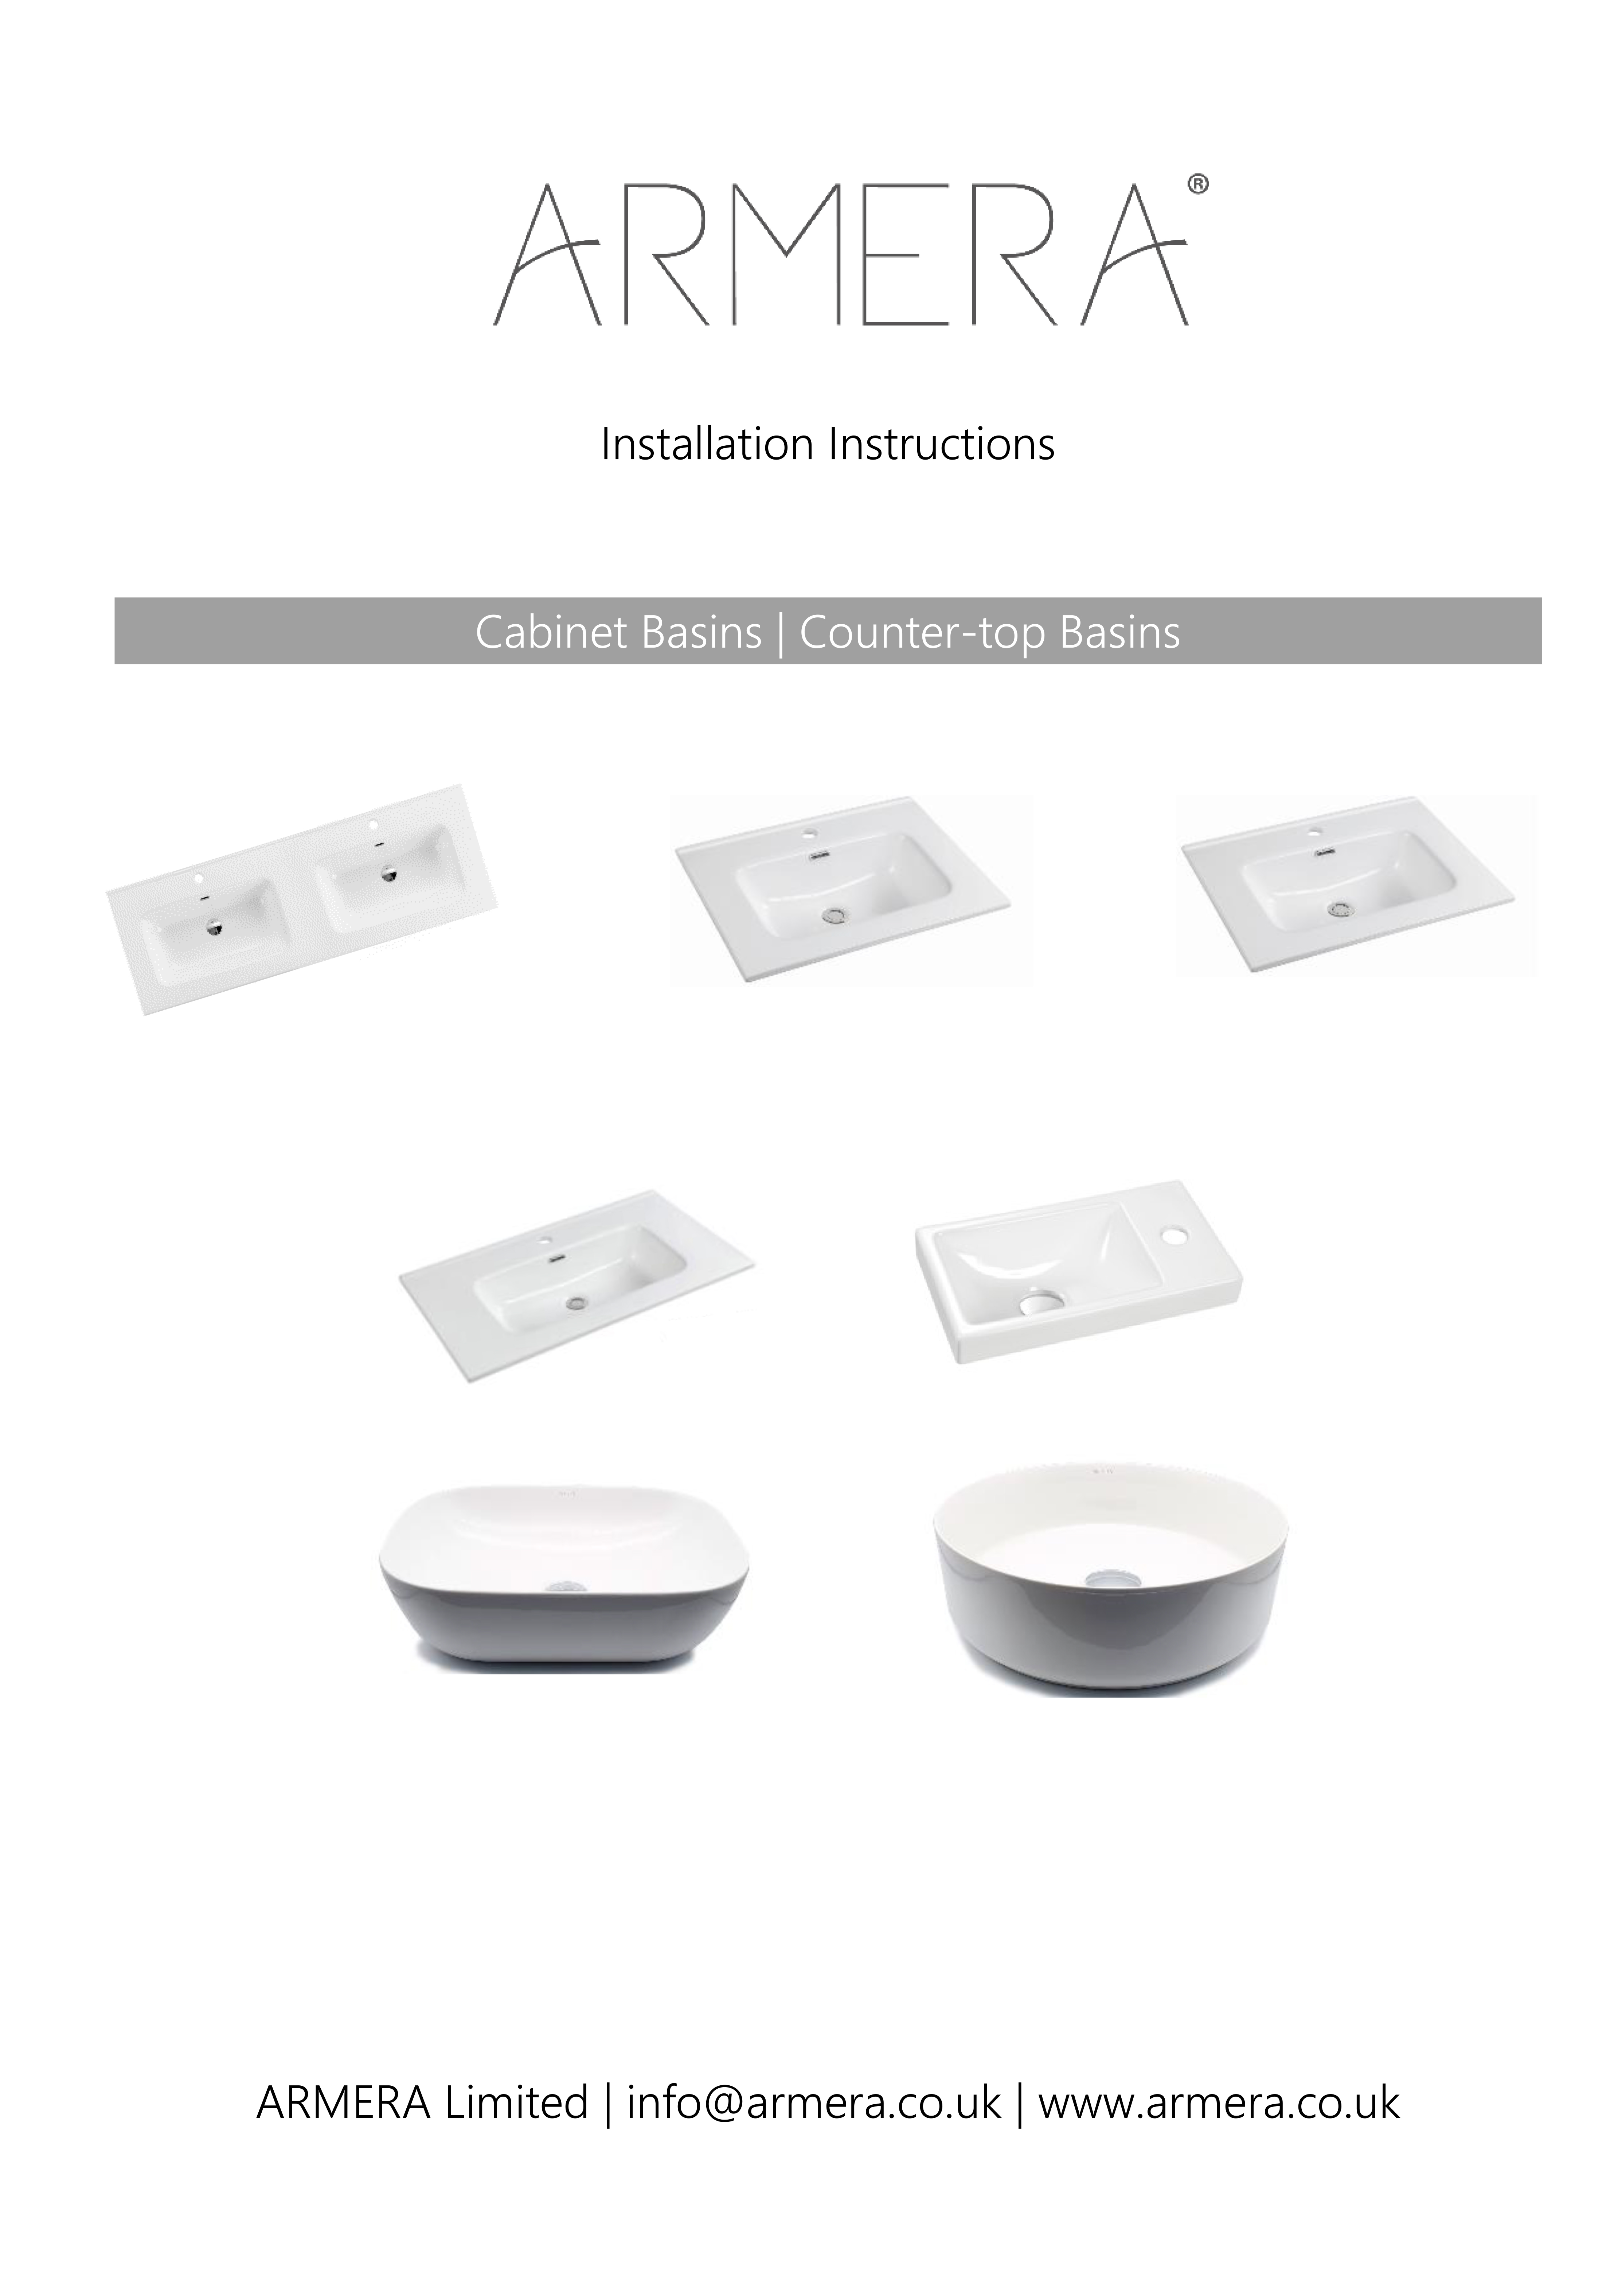 Cabinet basins & Counter top basins